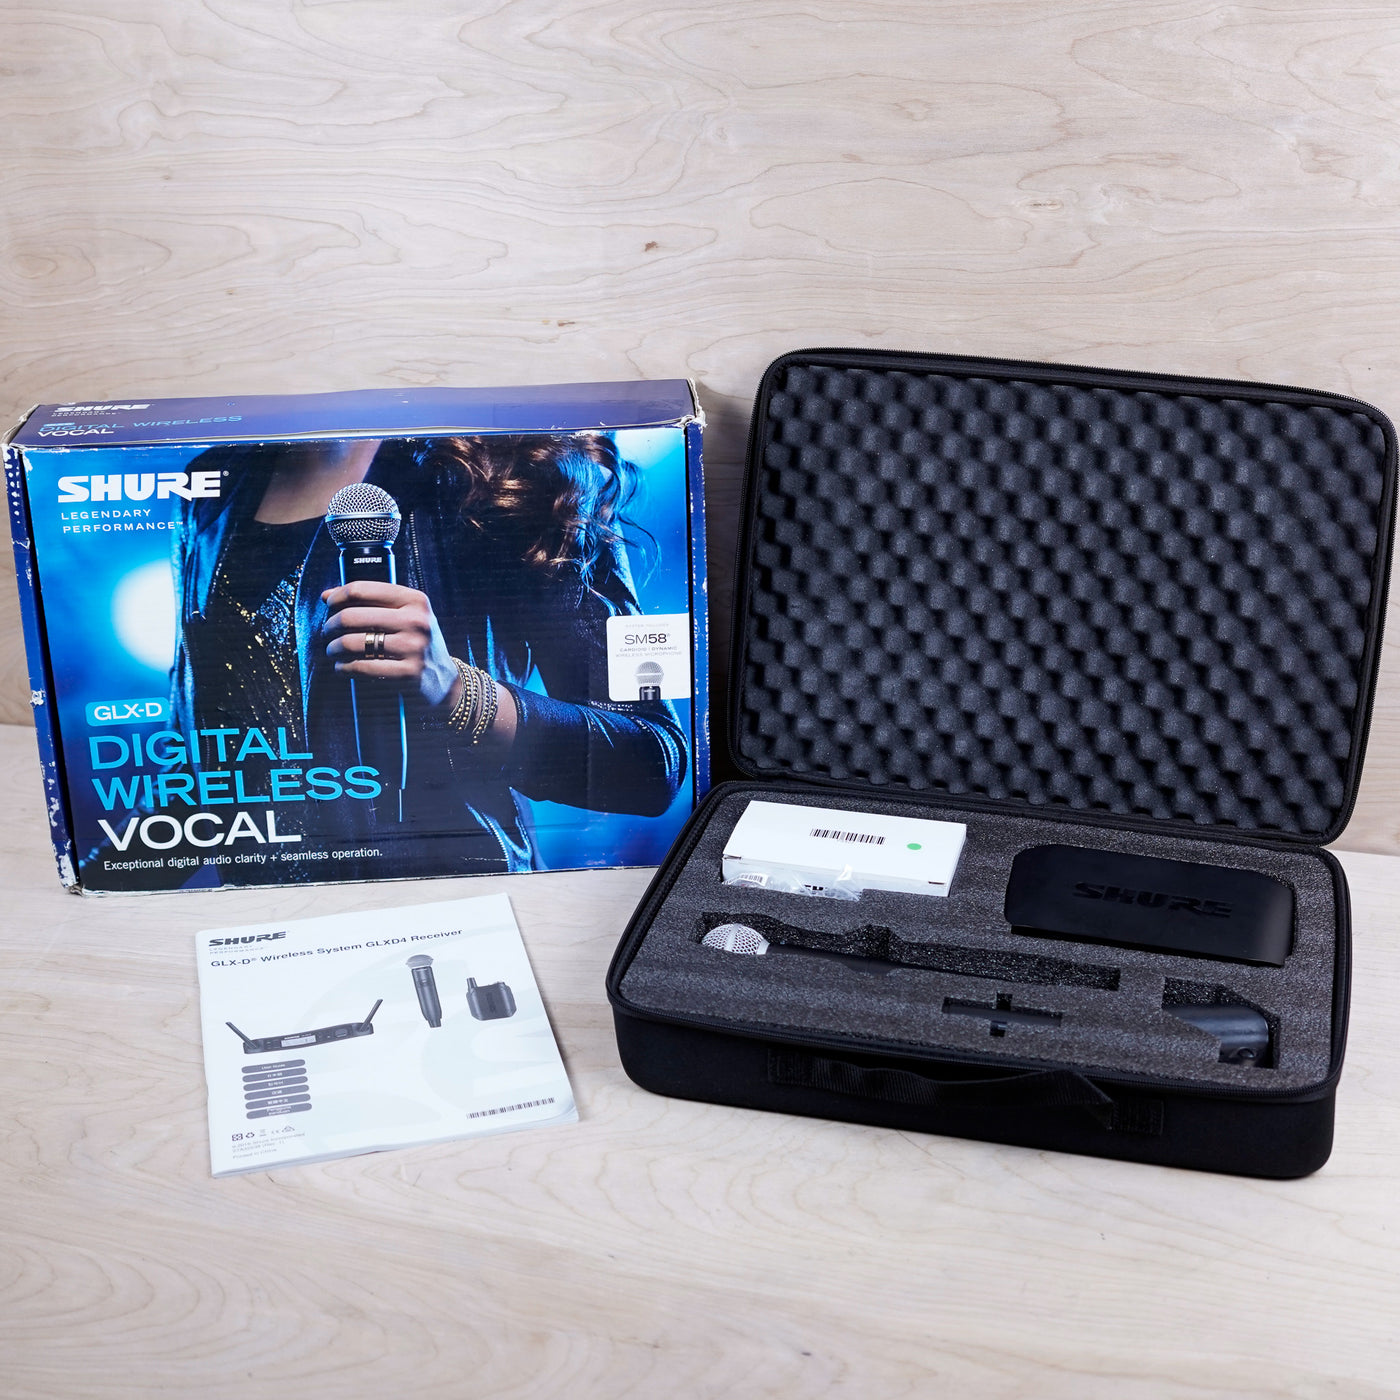 Shure GLX-D Digital Wireless Vocal System (SM58)